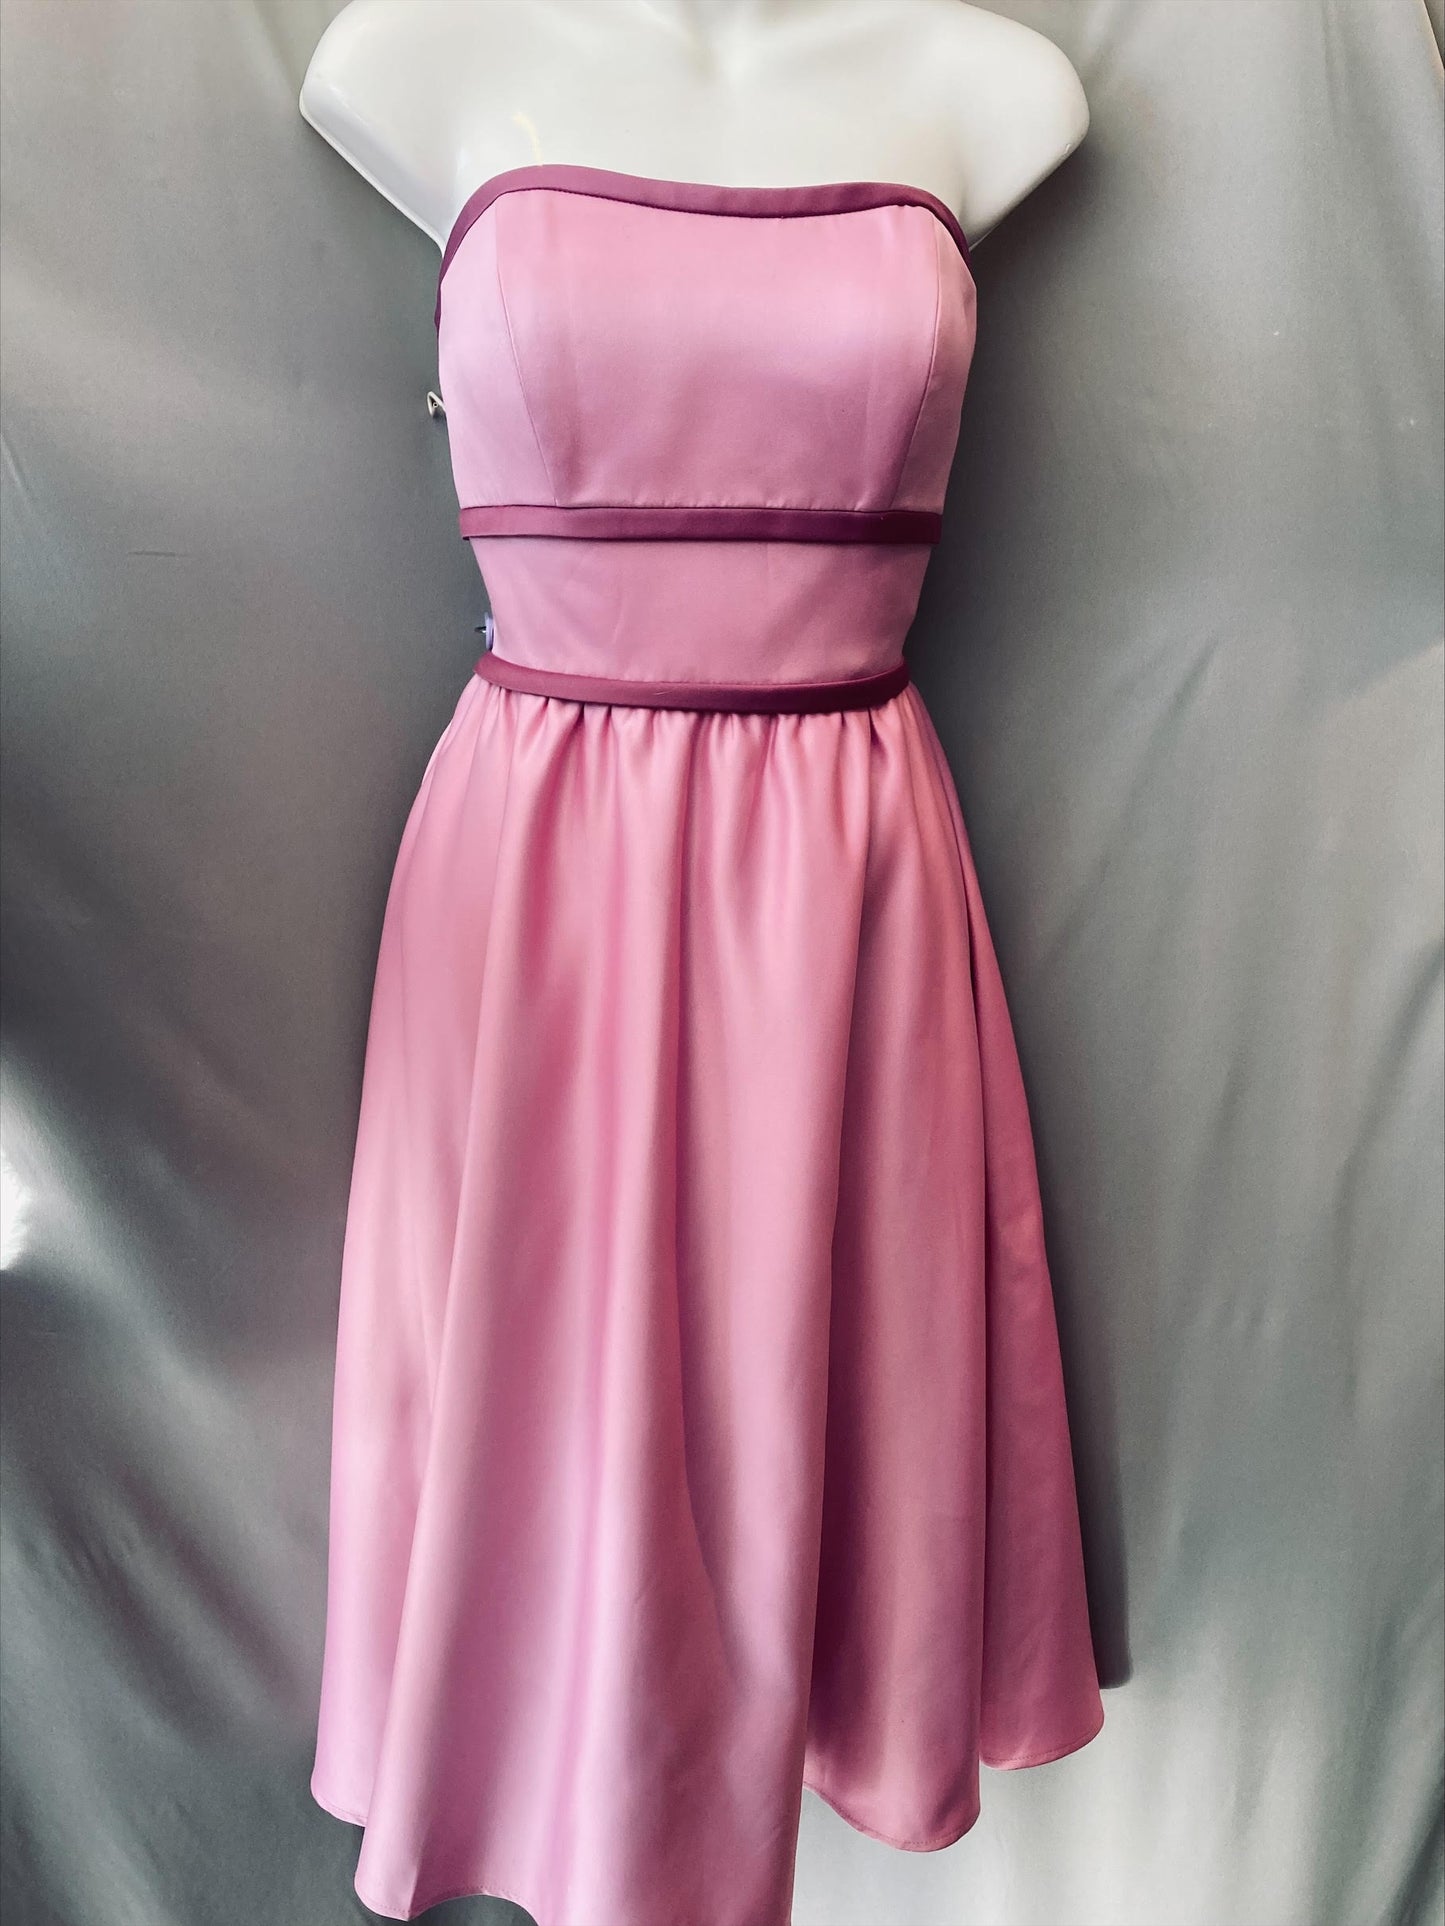 Morilee Short Dress Size 7/8 Style 782